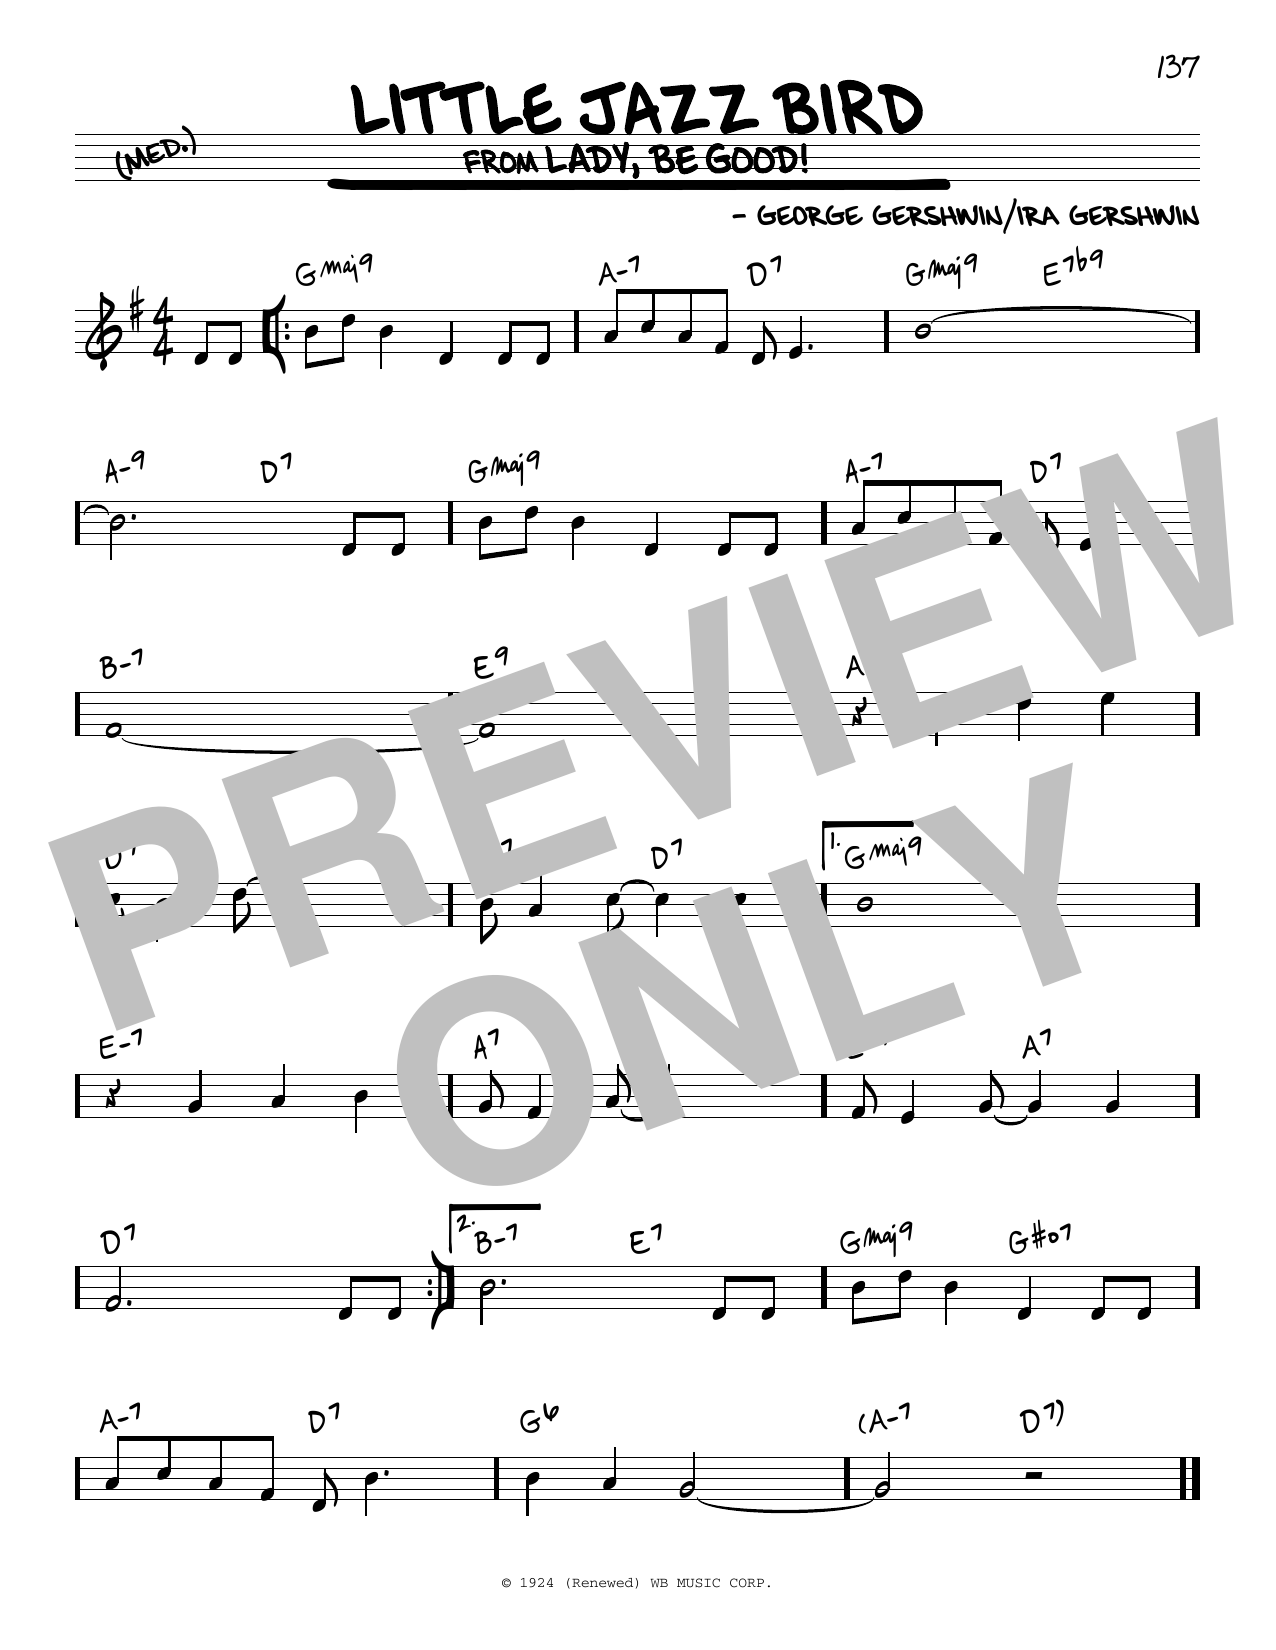 Download George Gershwin Little Jazz Bird Sheet Music